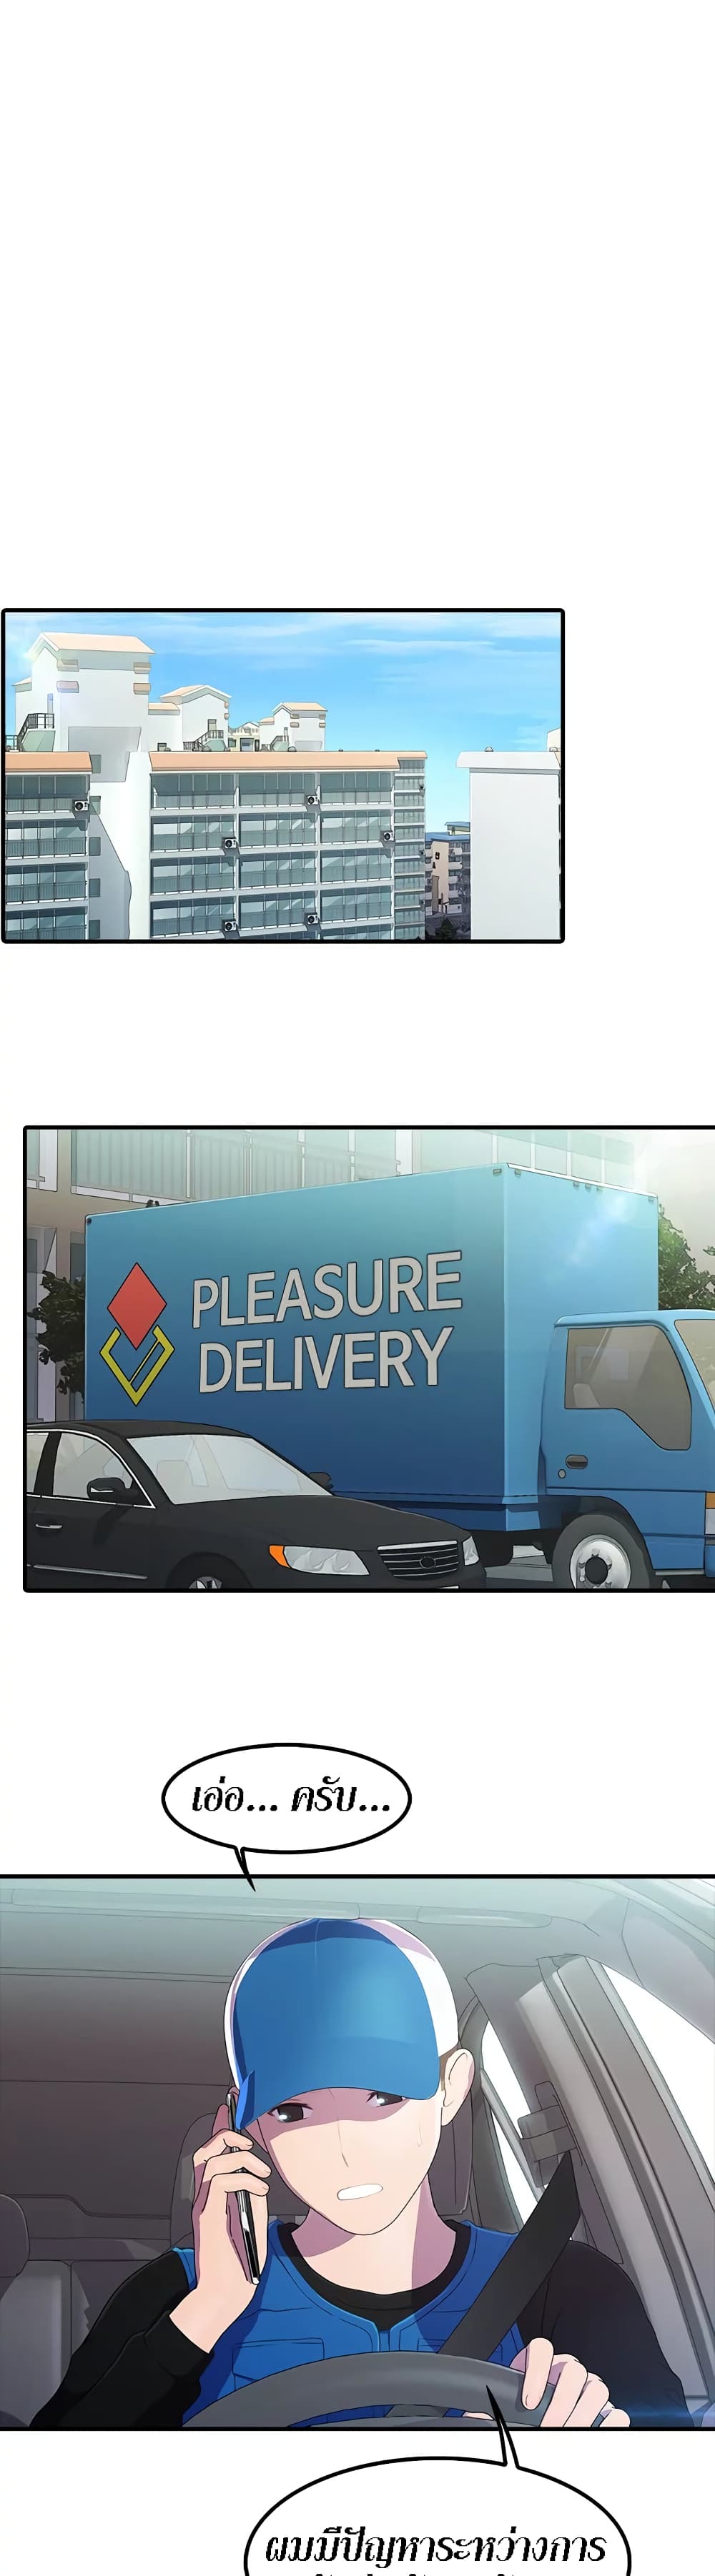 Pleasure Delivery 2 (2)